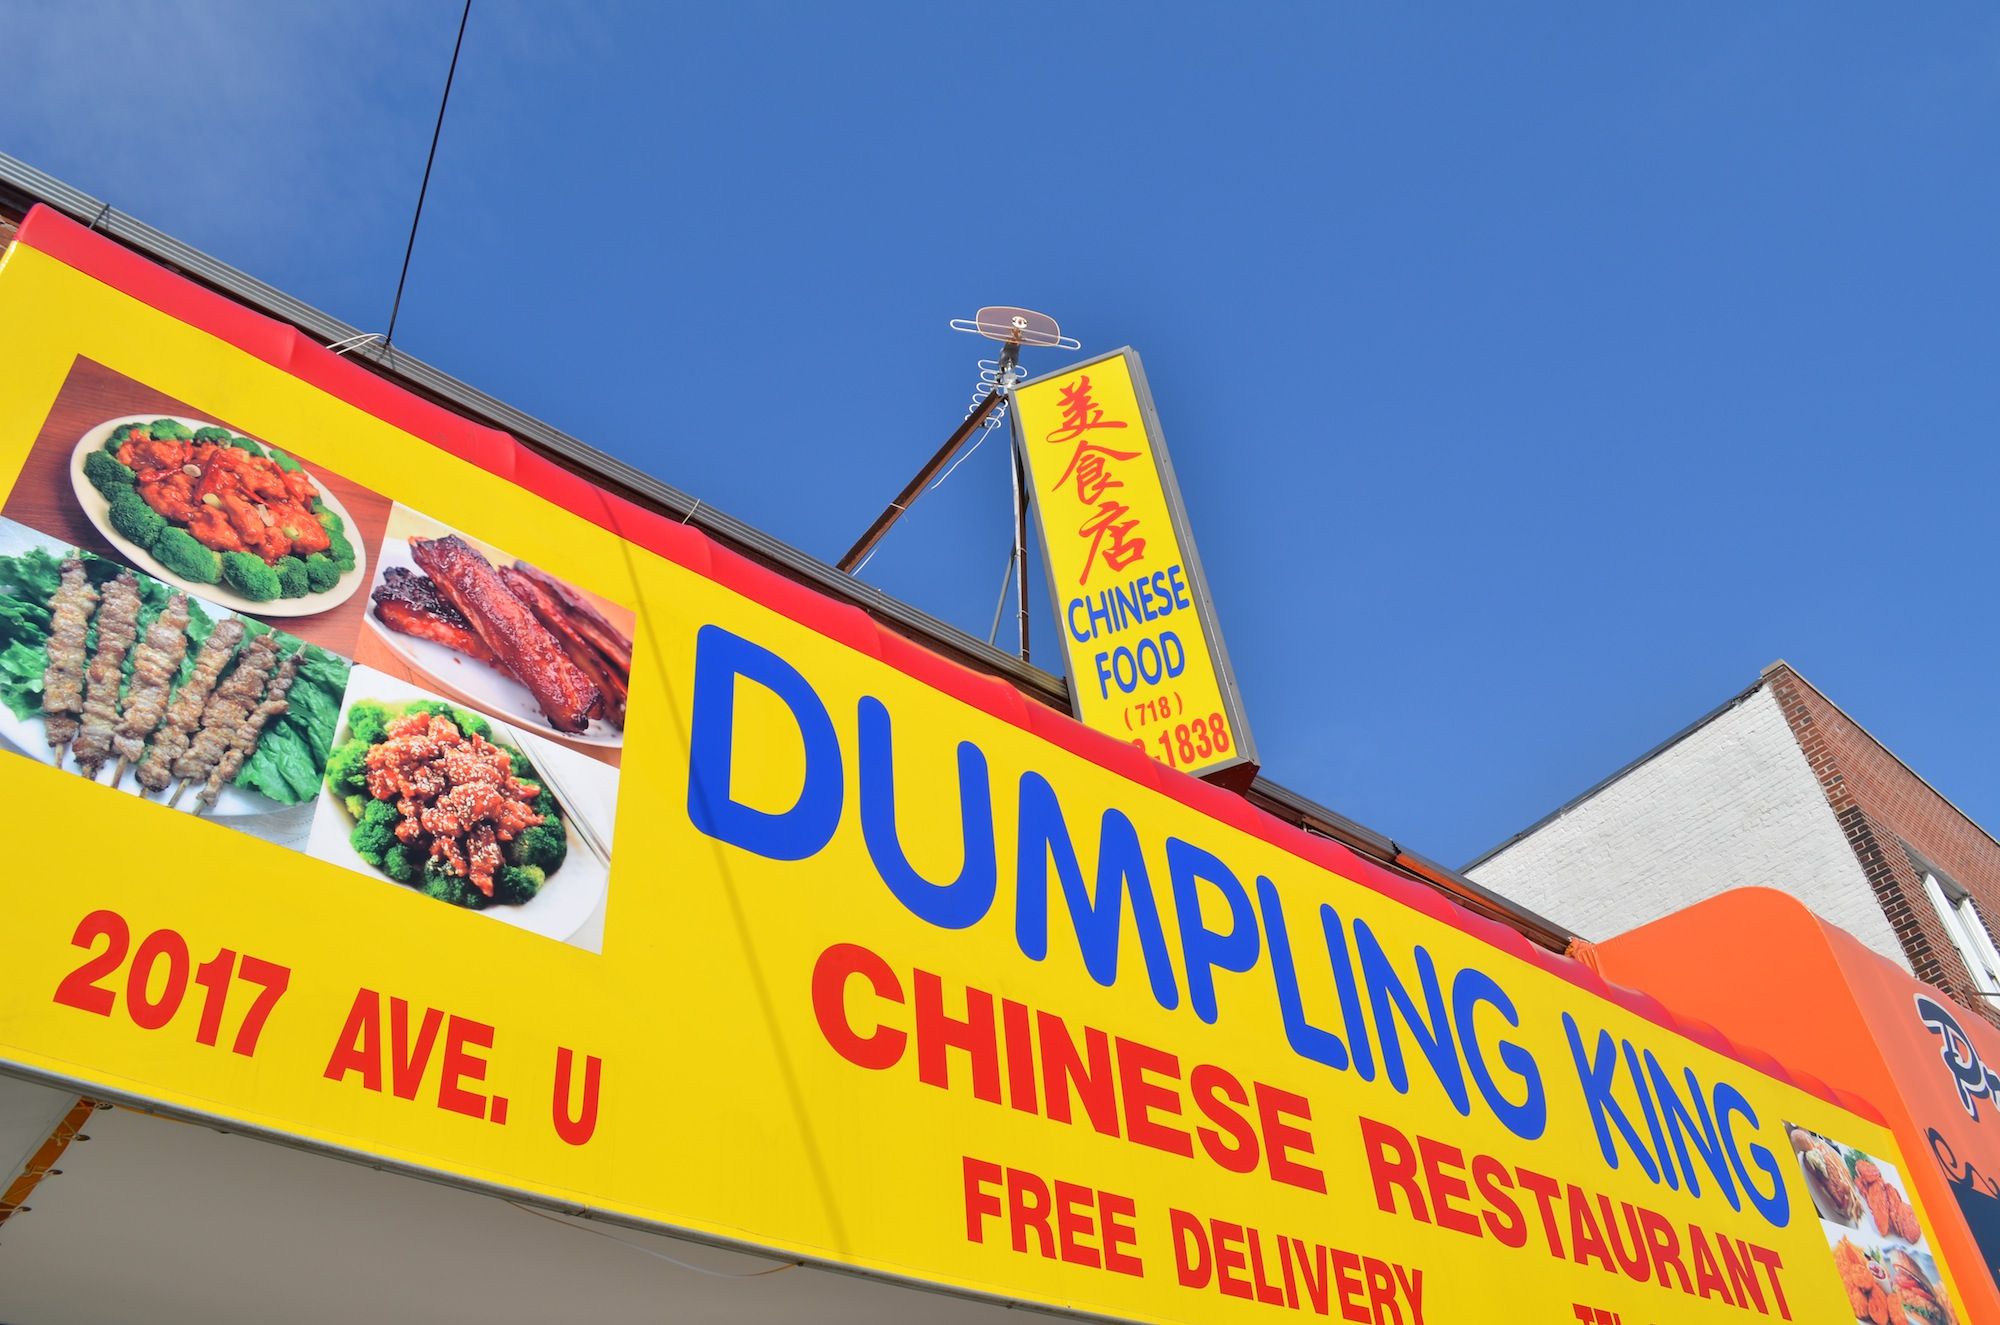 Dumpling King's new sign at their storefront at 2017 Avenue U. (Photo: Alex Ellefson / Sheepshead Bites)